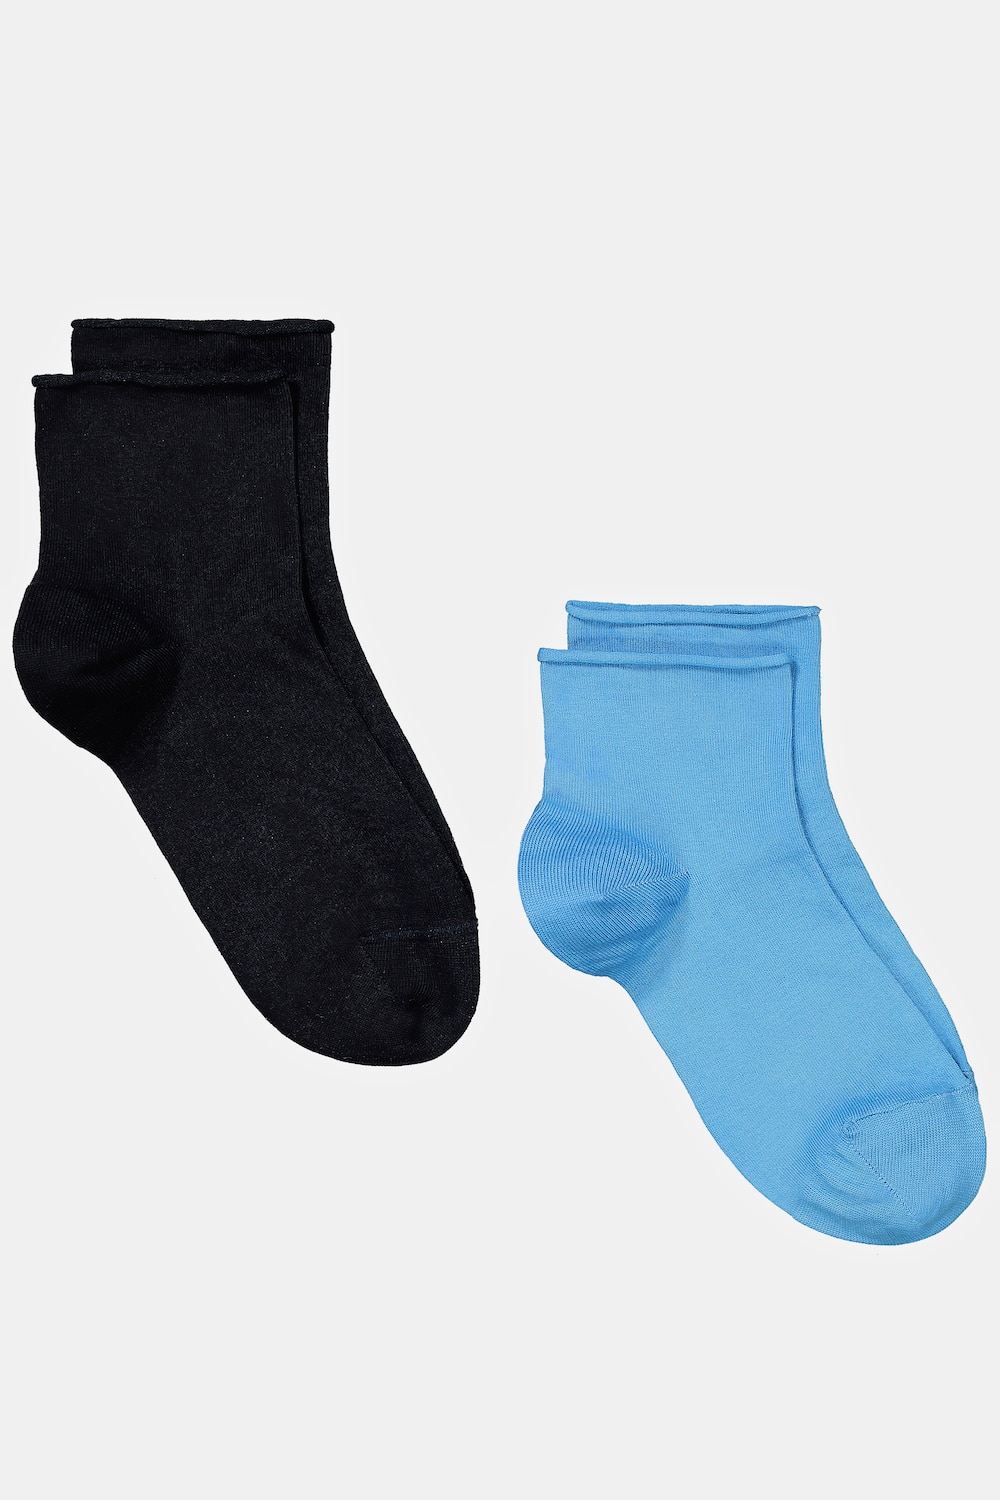 Plus Size 2 Pack of Roll Top Stretch Socks, Woman, blue, size: 4.5-6.5, cotton/synthetic fibers, Ulla Popken